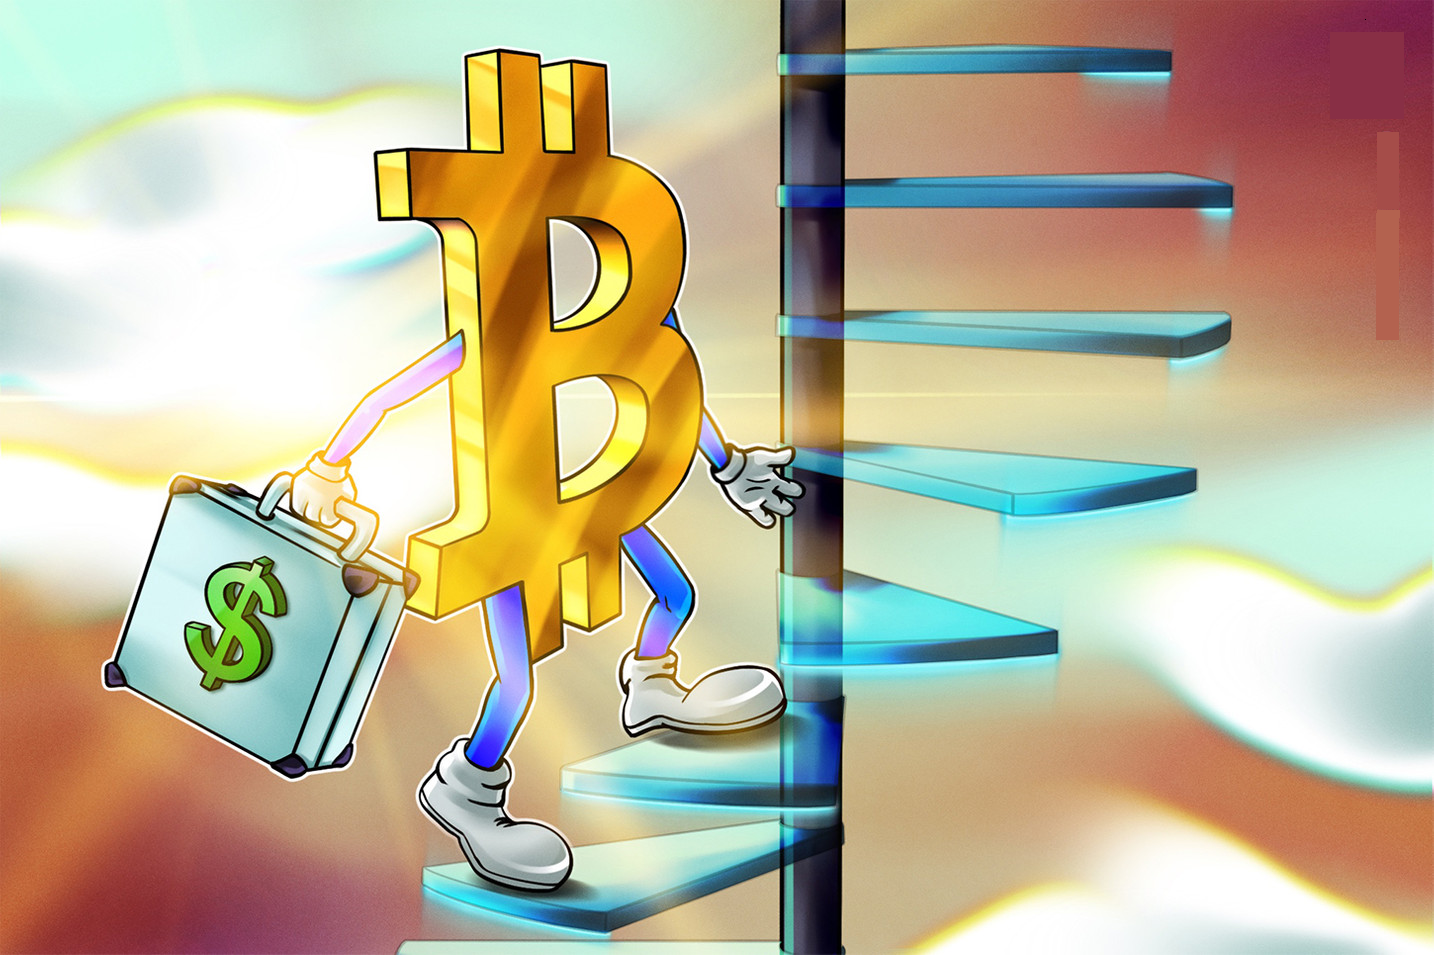 Mua Bitcoin o vung 40.000 USD: “Bat day” hay “du dinh”? - anh 1